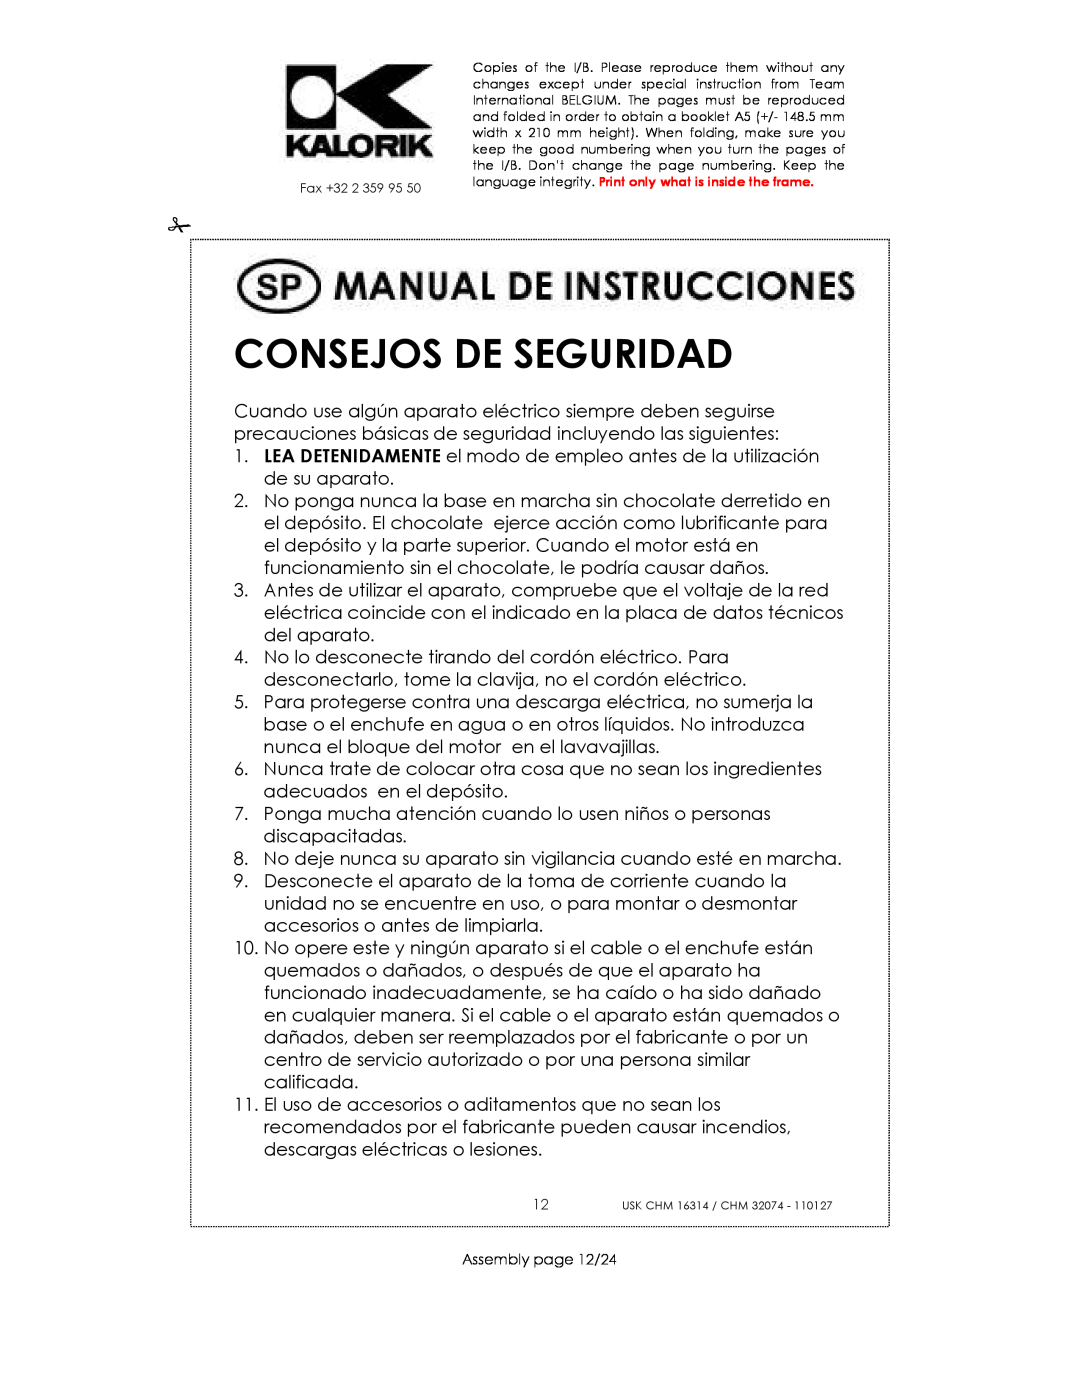 Kalorik CHM 16314, CHM 32074 manual Consejos De Seguridad, Assembly page 12/24 